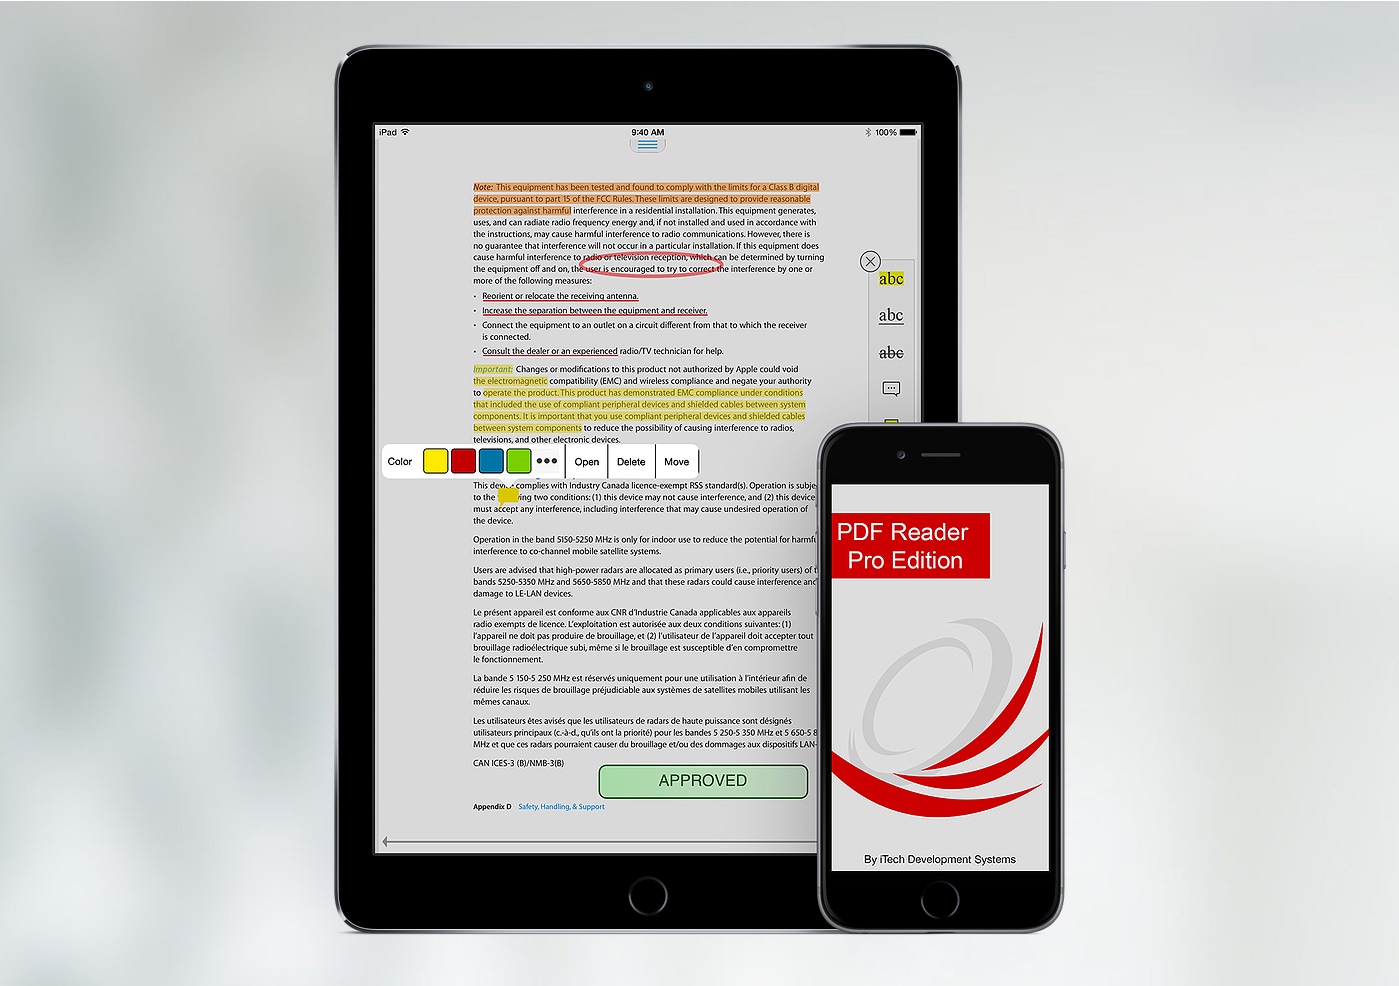 Aplicativo PDF Reader Pro Edition para iOS